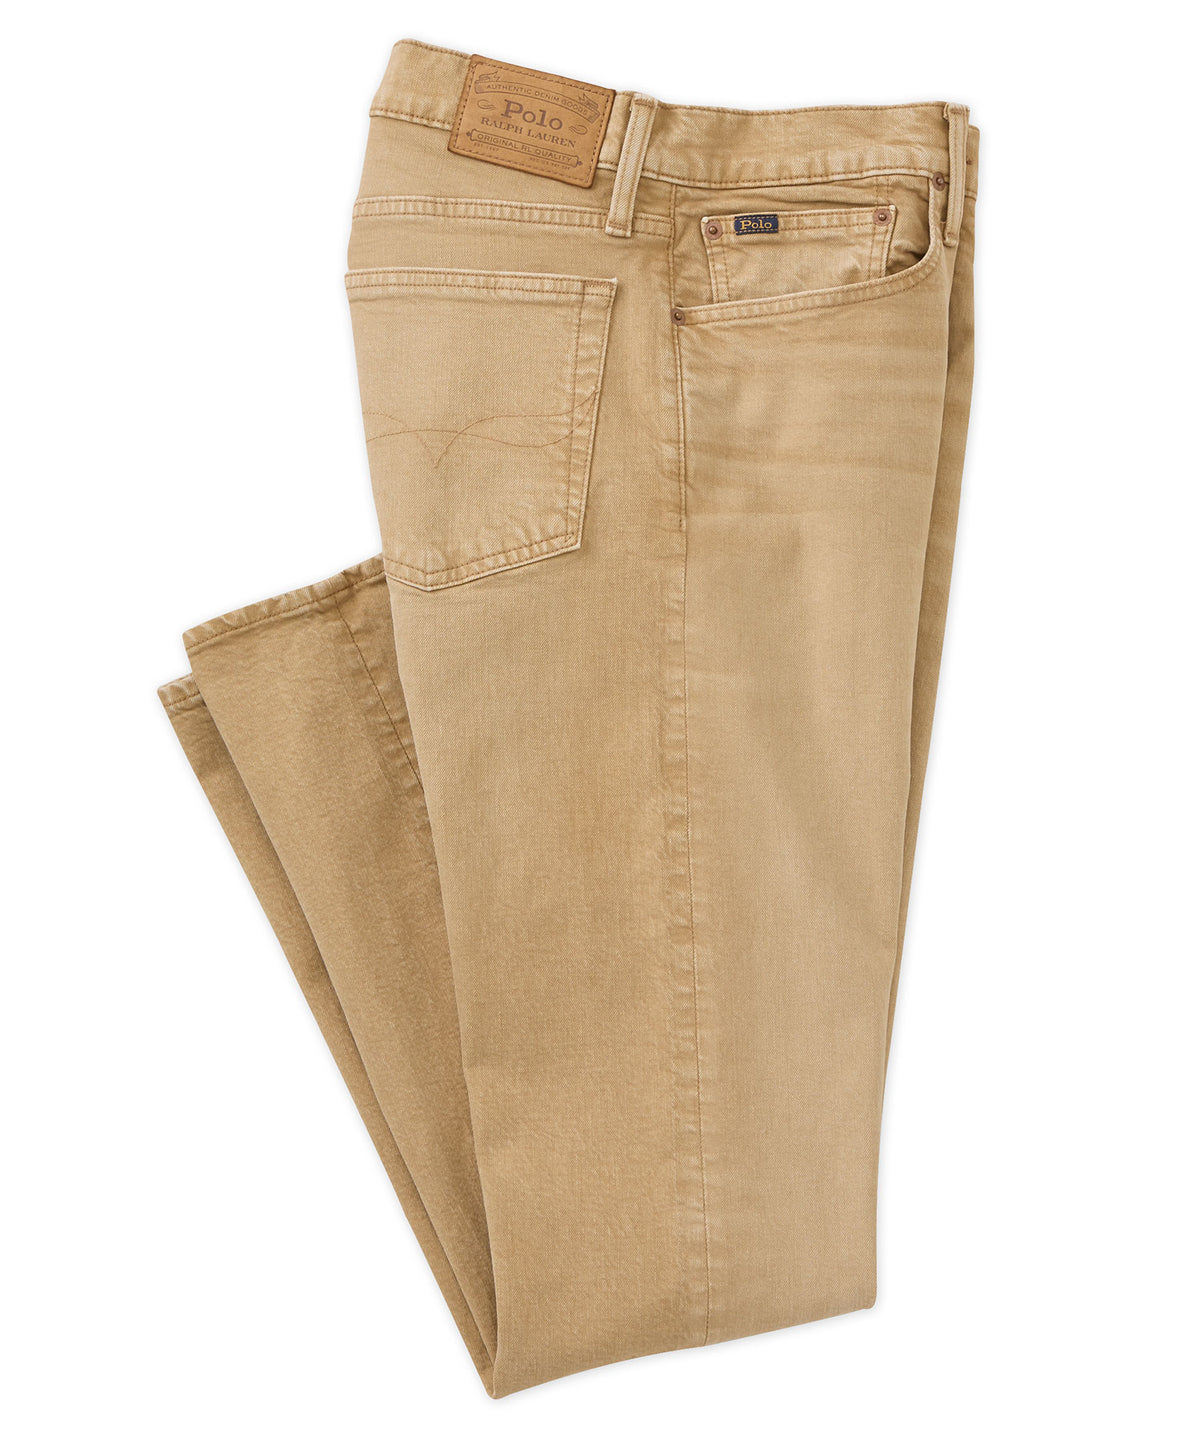 Polo Ralph Lauren Stretch Denim 5-Pocket Jeans, Big & Tall